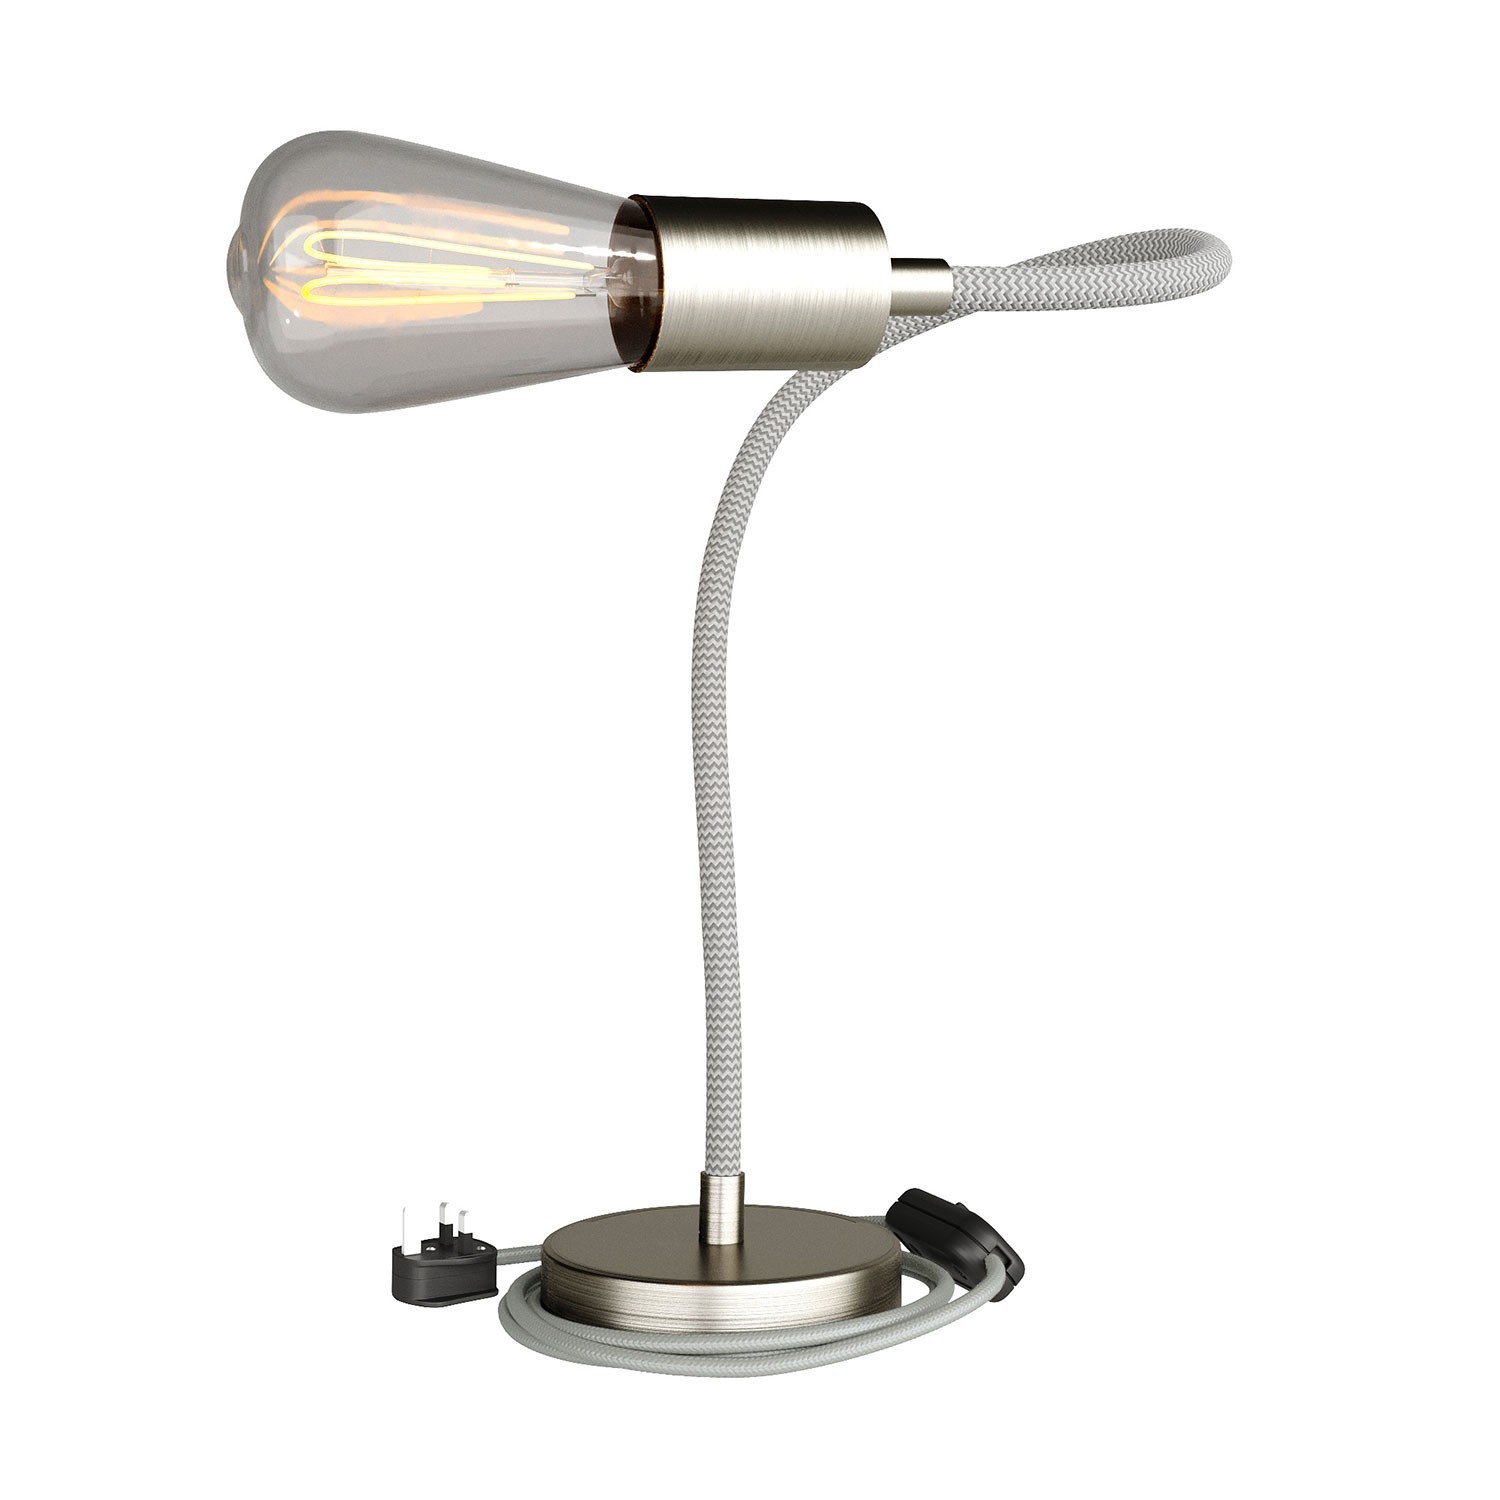 Flex flexible table lamp providing diffused light